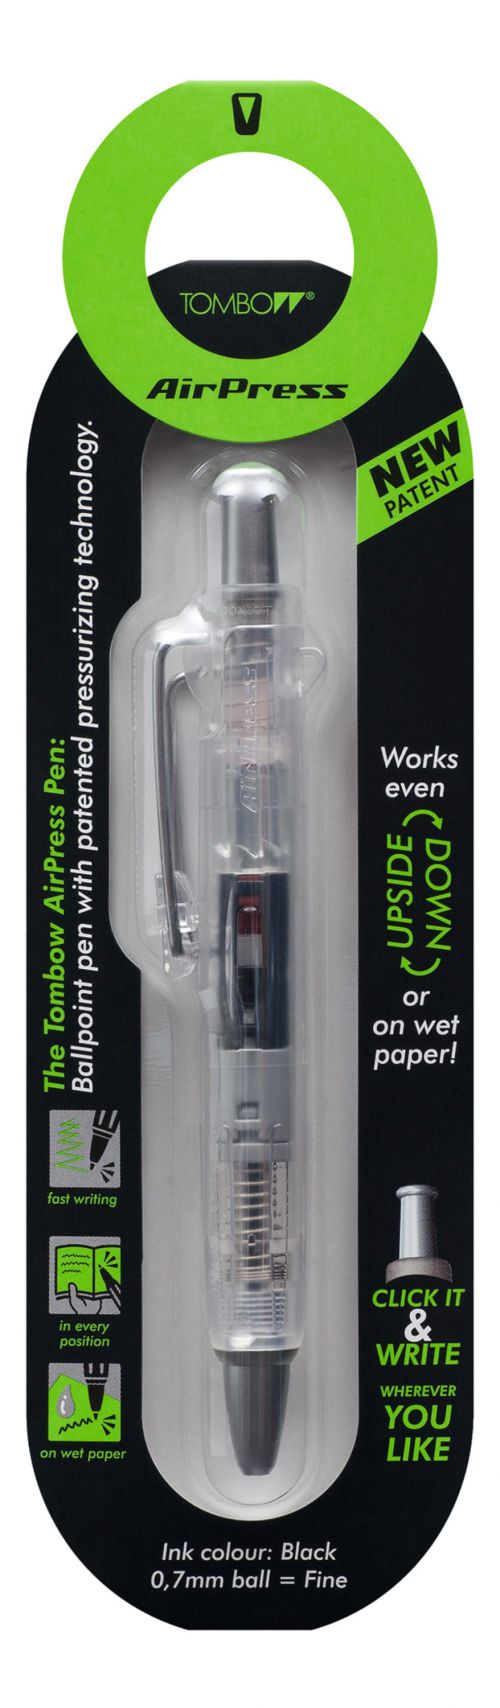 Tombow AirPress Retractable Ballpoint Pen 0.7mm Tip Transparent Barrel Black Ink - BC-AP20